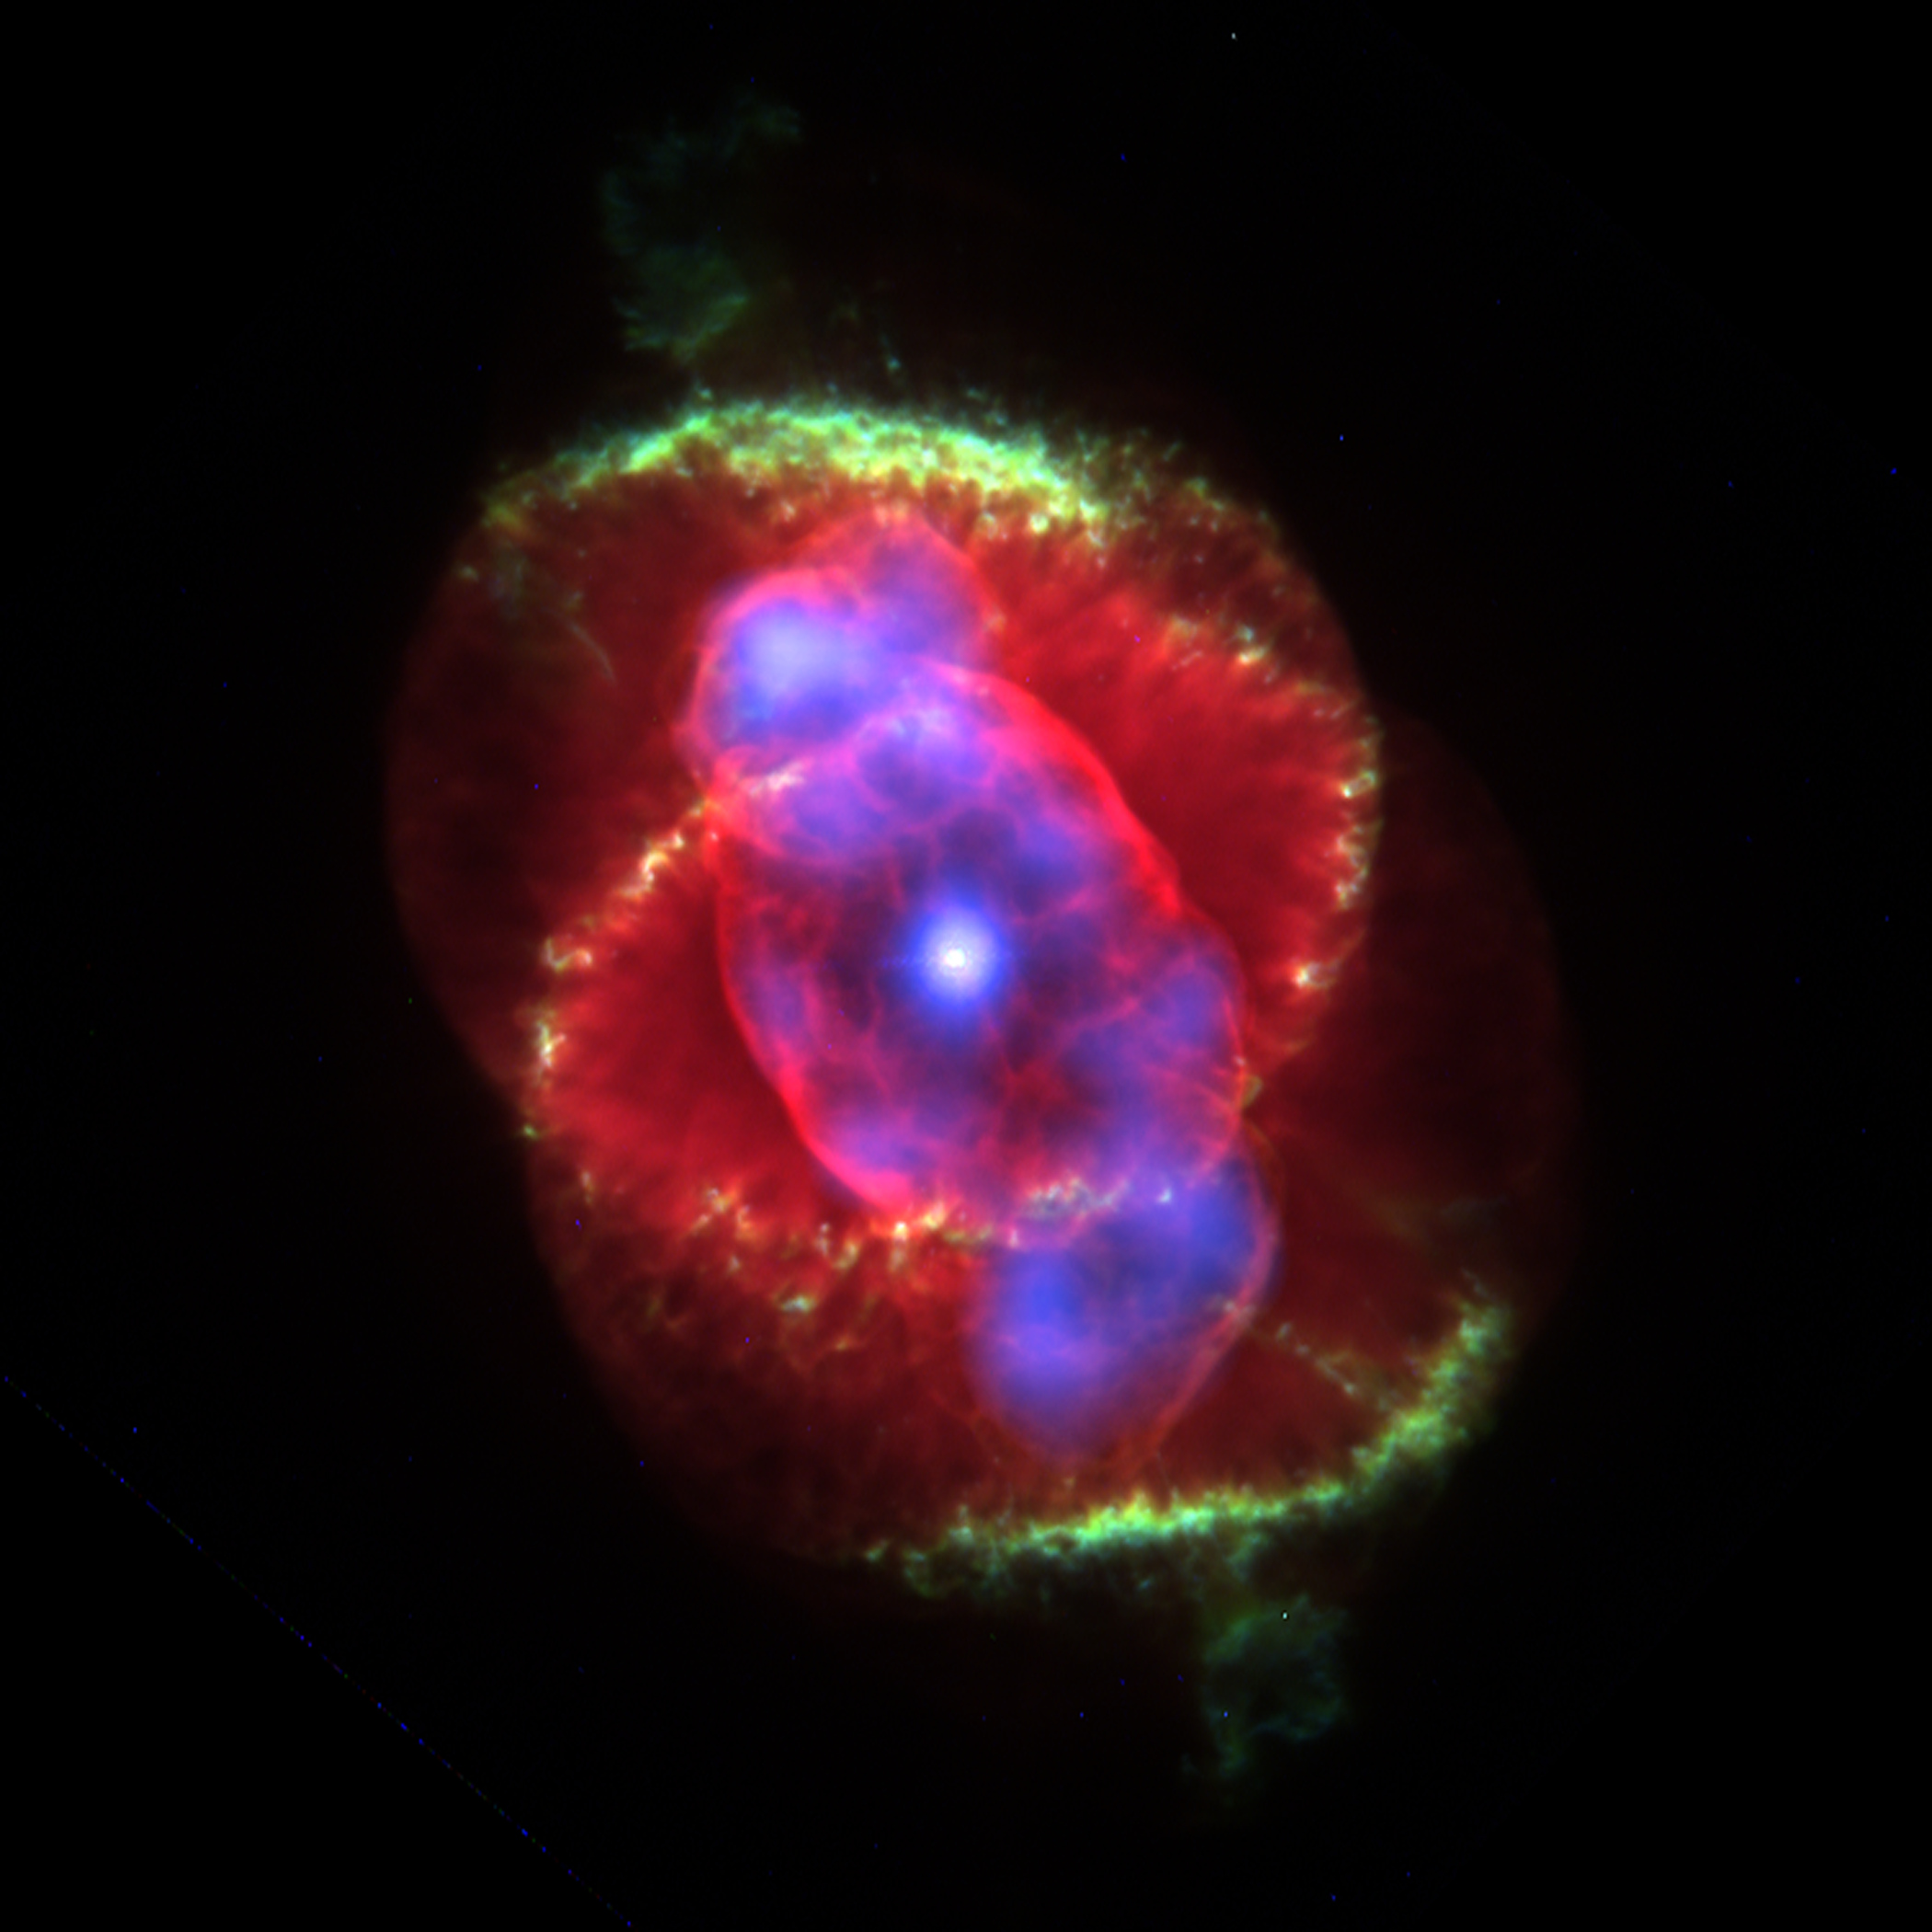 The Cat's Eye Nebula, a planetary nebula forme...